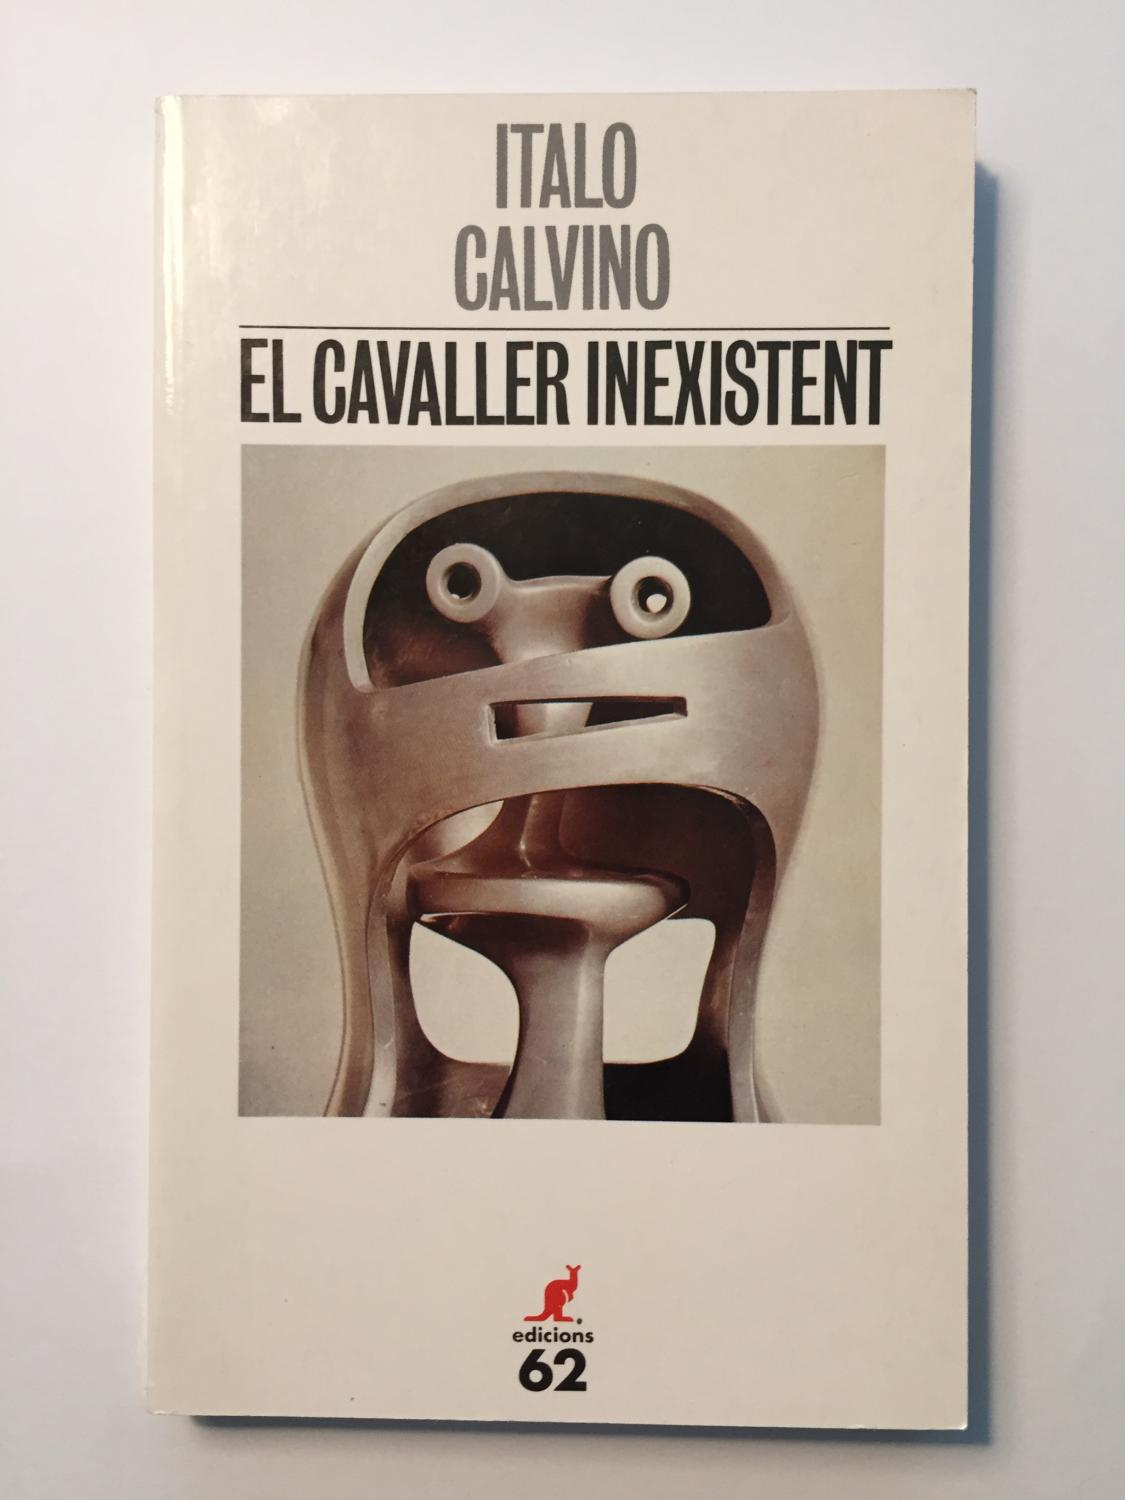 El cavaller inexistent - Italo Calvino